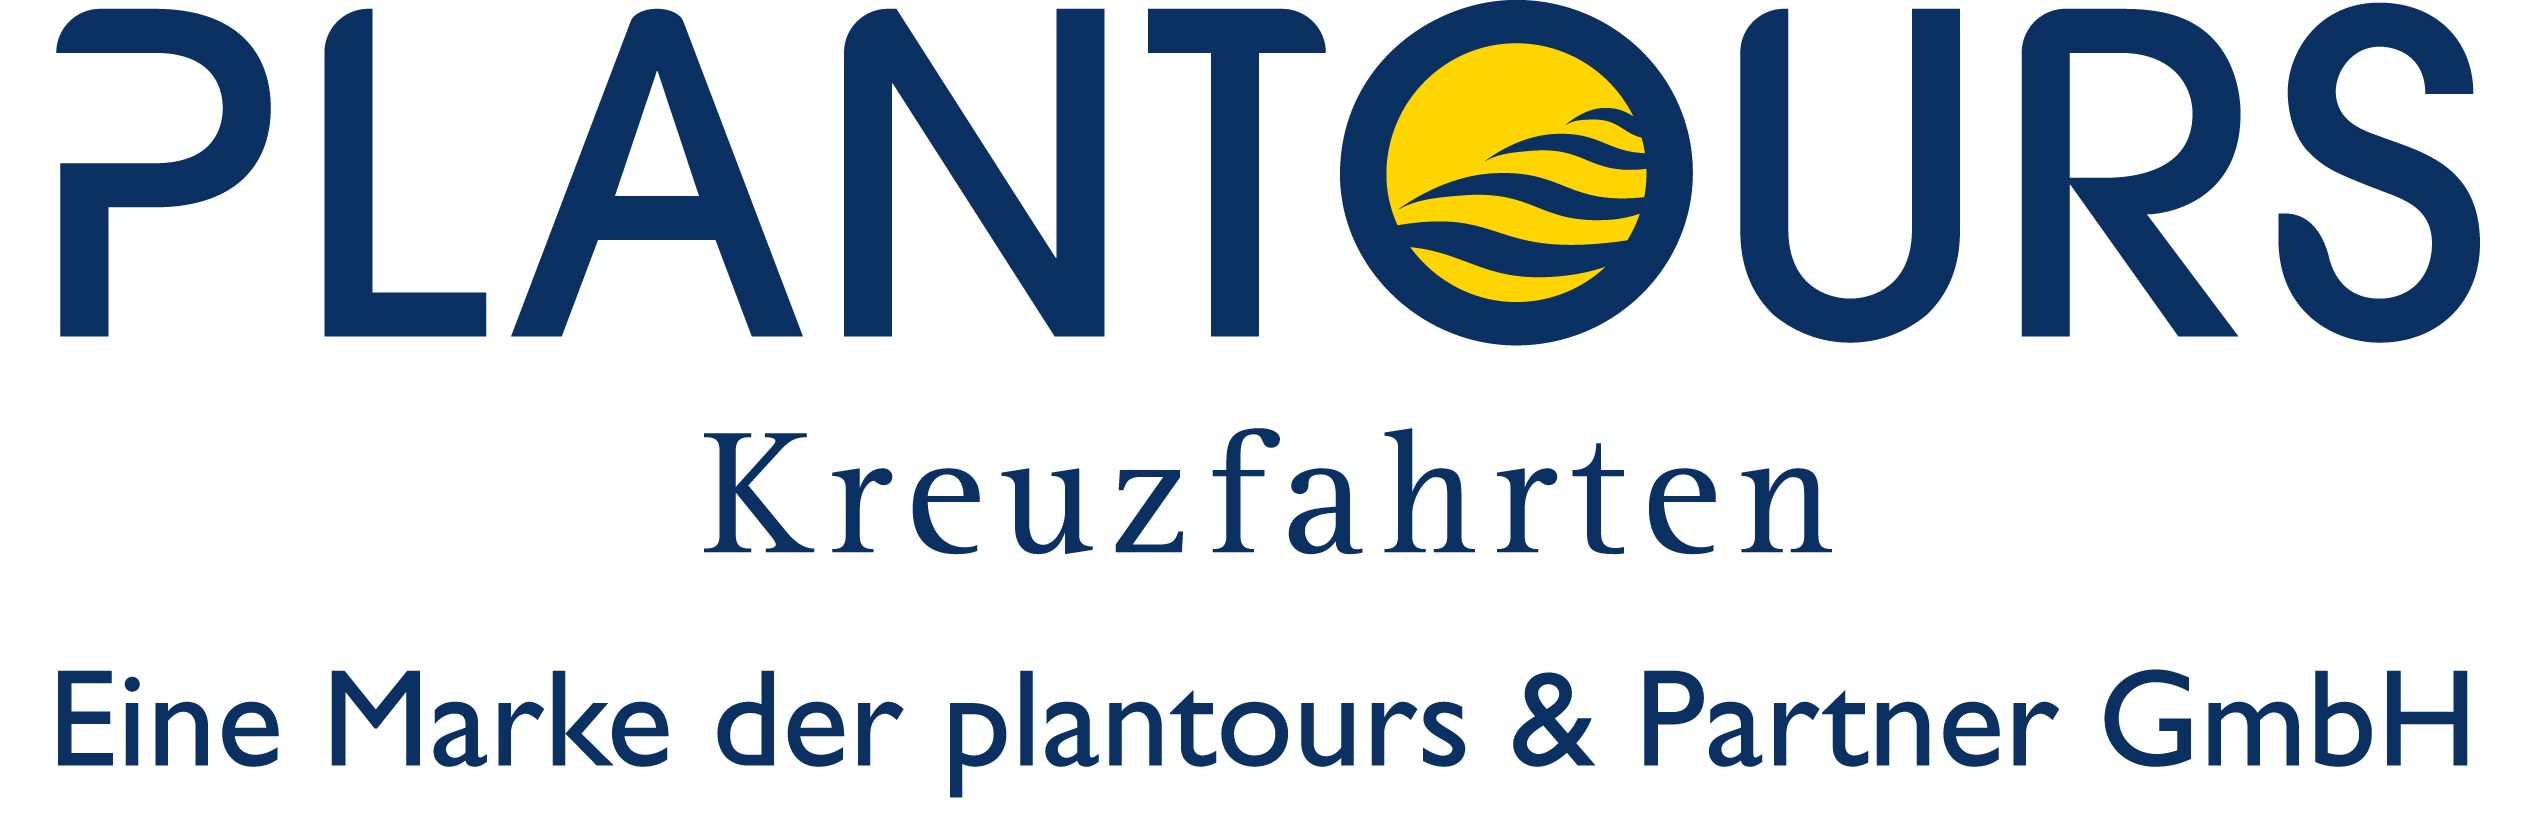 Logo Plantours Kreuzfahrten 4c